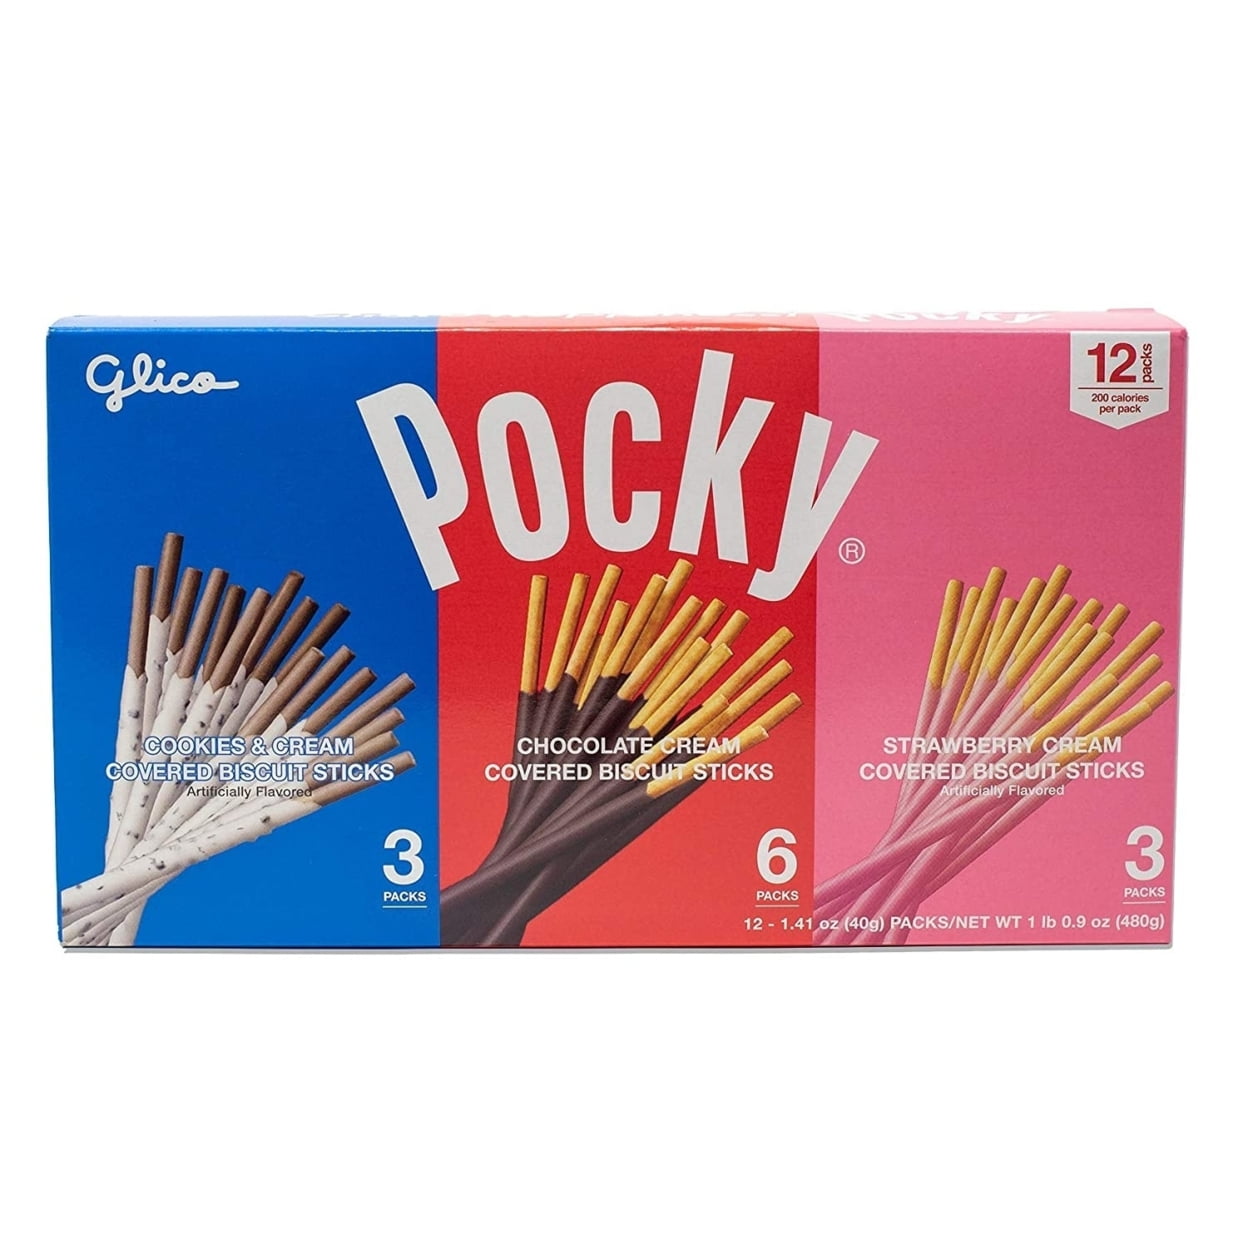 Glico Pocky Biscuit Sticks 3 Variété de Saveur, Belgium